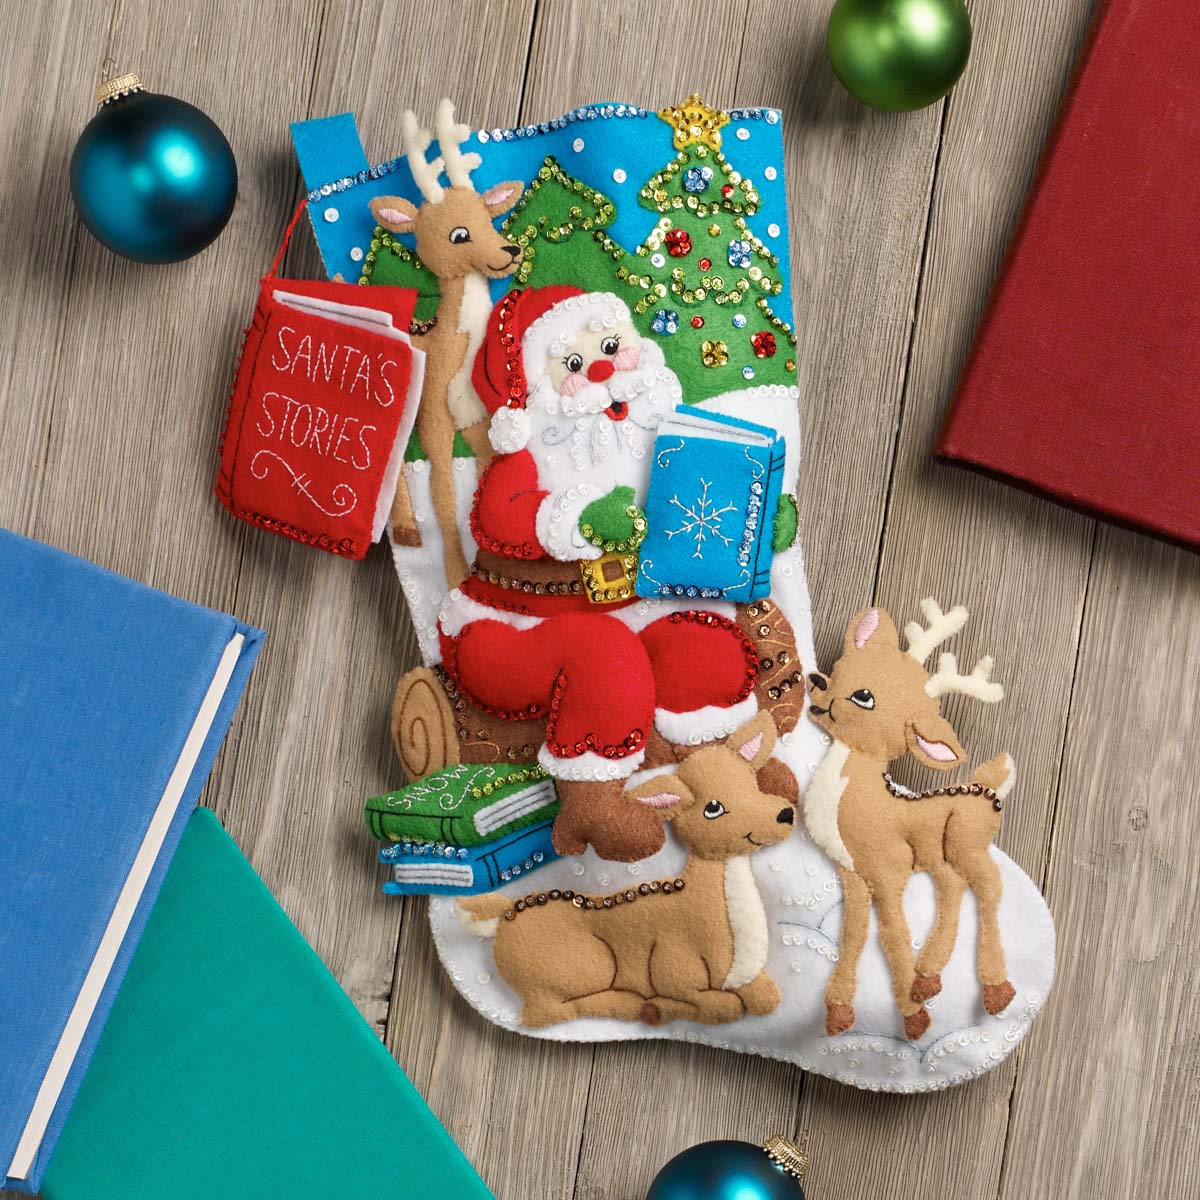 Bucilla ® Seasonal - Felt - Stocking Kits - Story Time Santa - 89482E